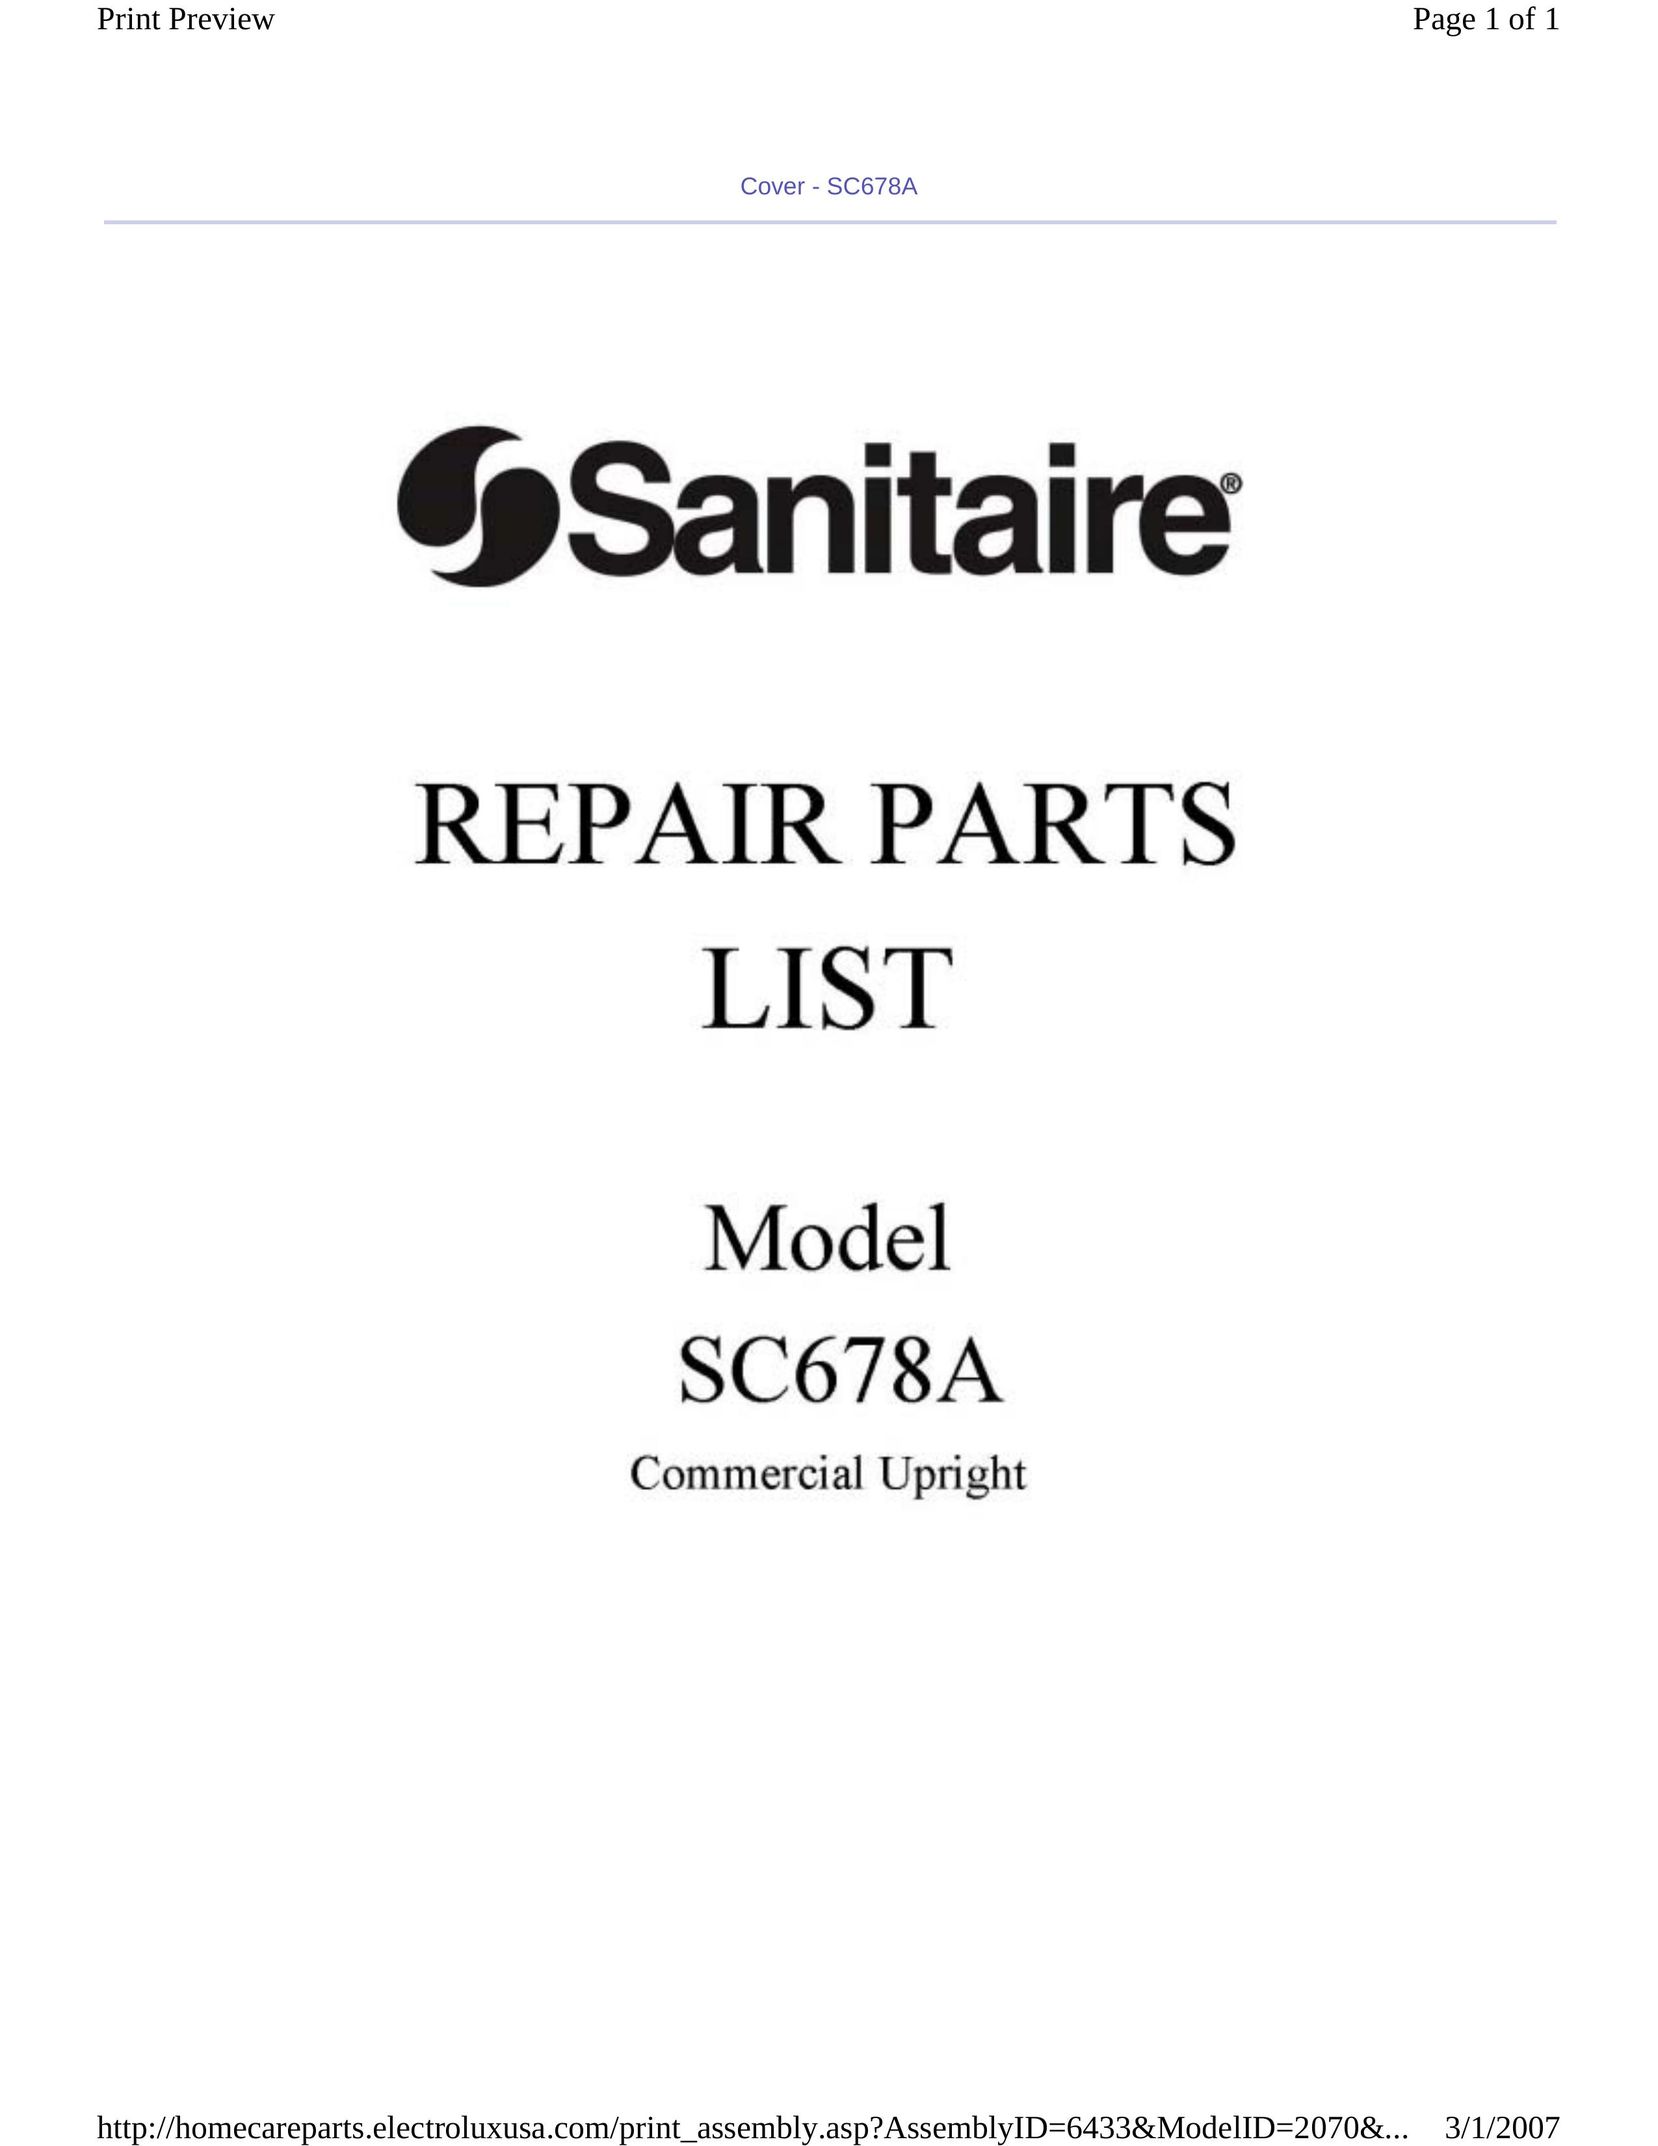 Sanitaire SC678A Vacuum Cleaner User Manual